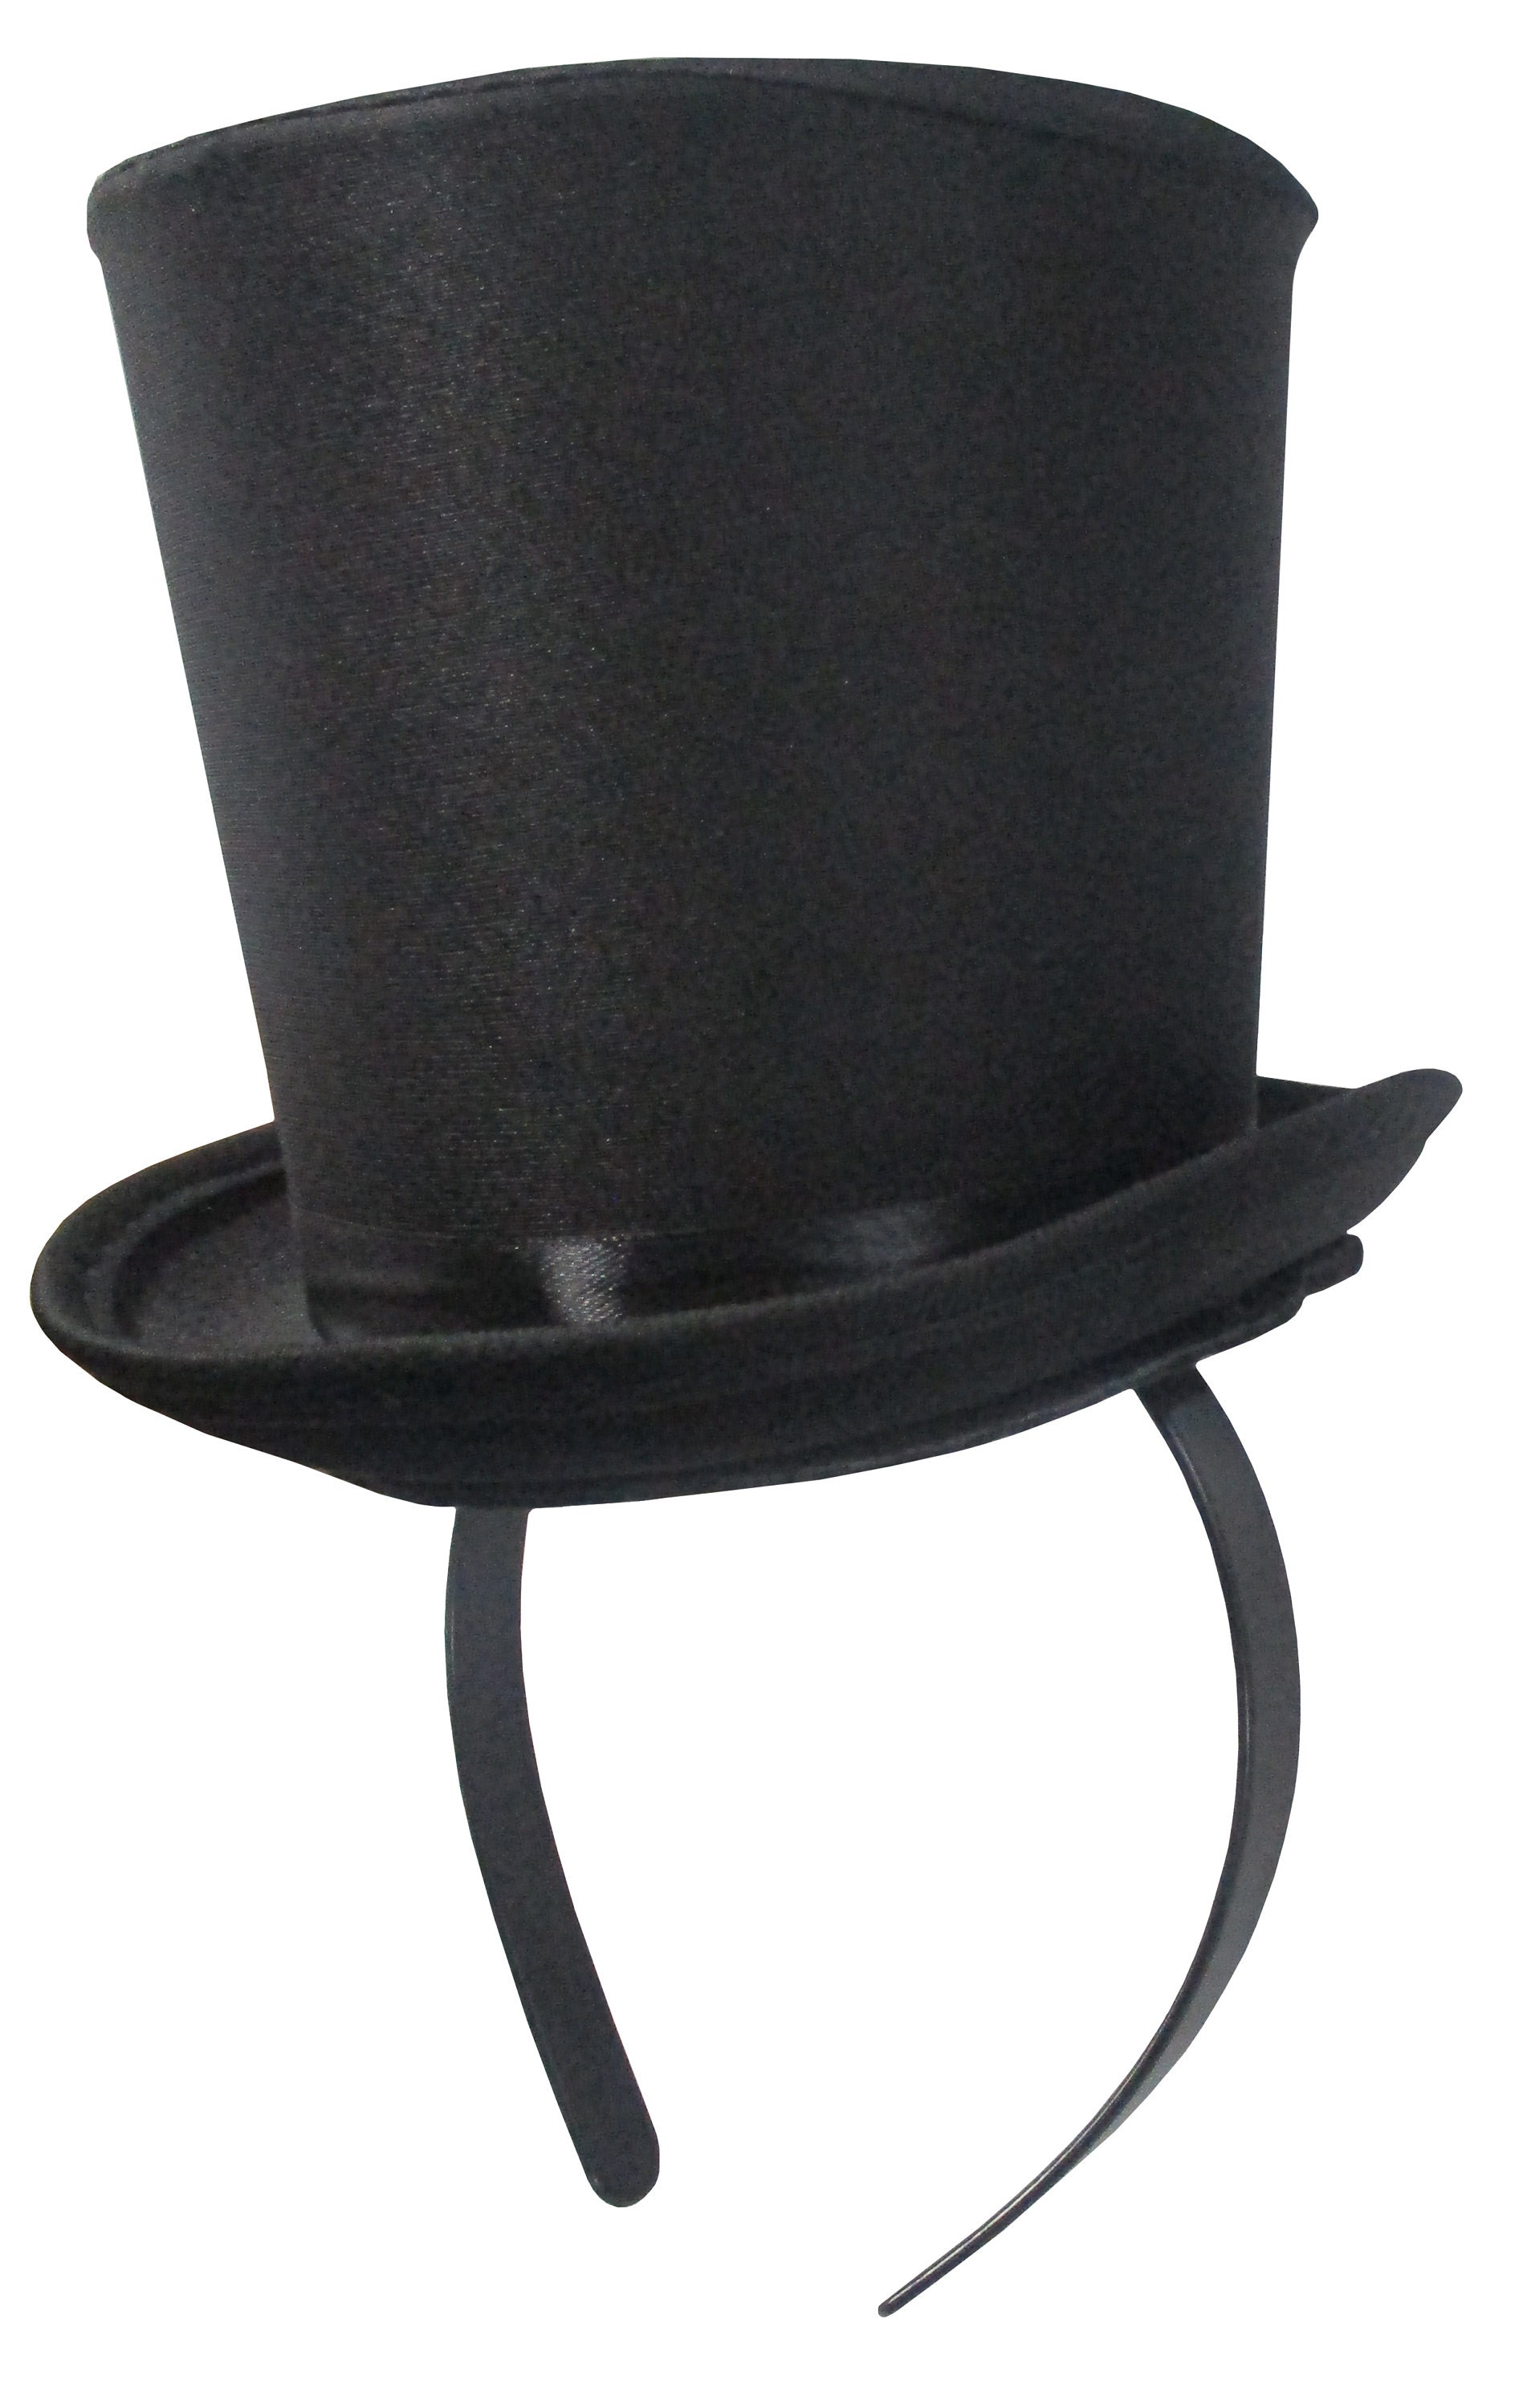 Mini Top Hat Fascinator Headband Hairband with Black Band Black 